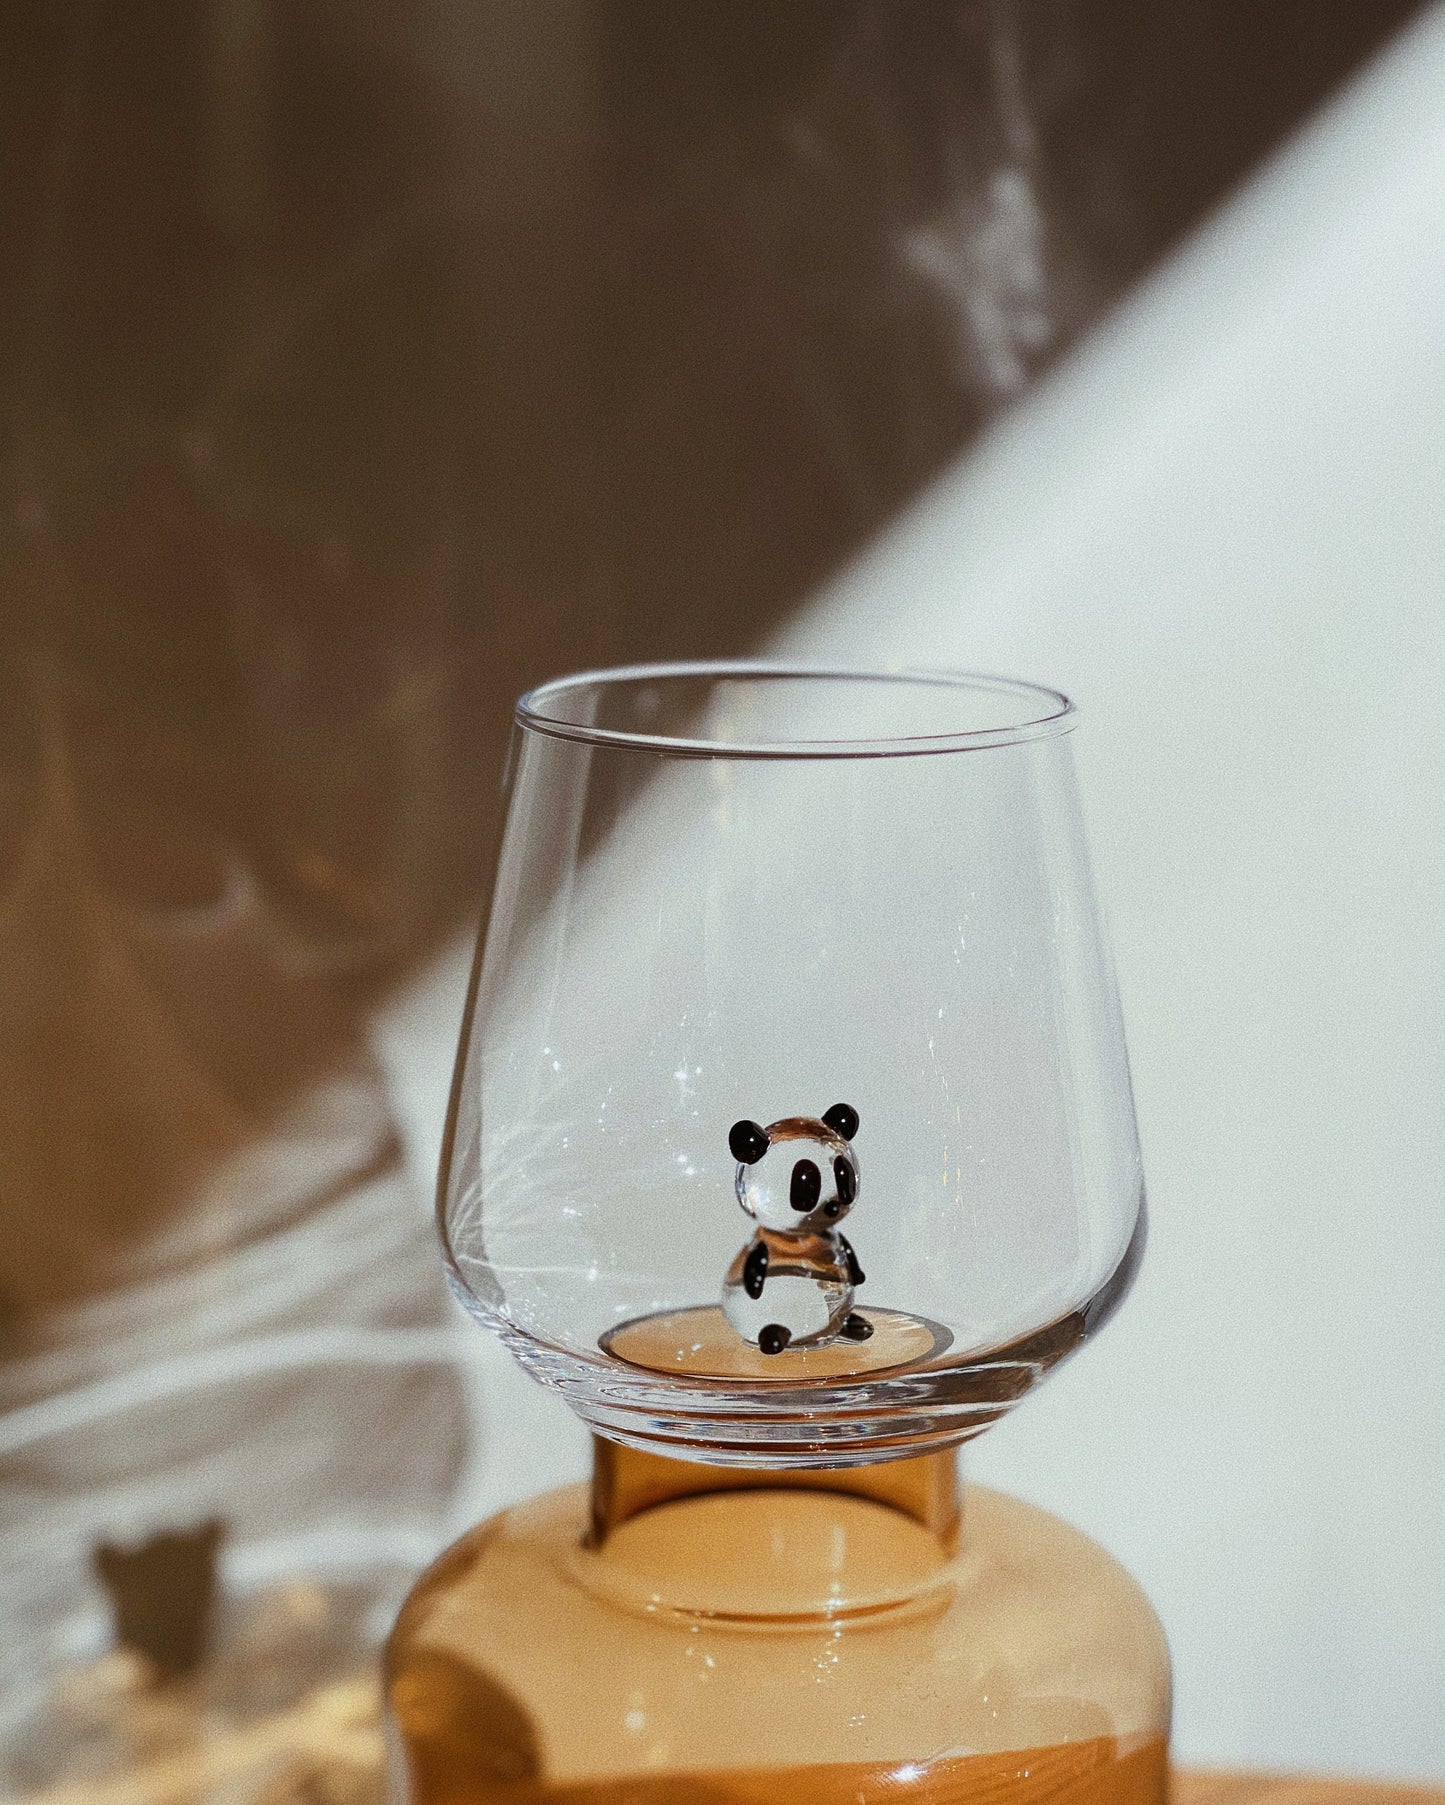 Cute animal shaped handmade drinking glasses - Japan Today